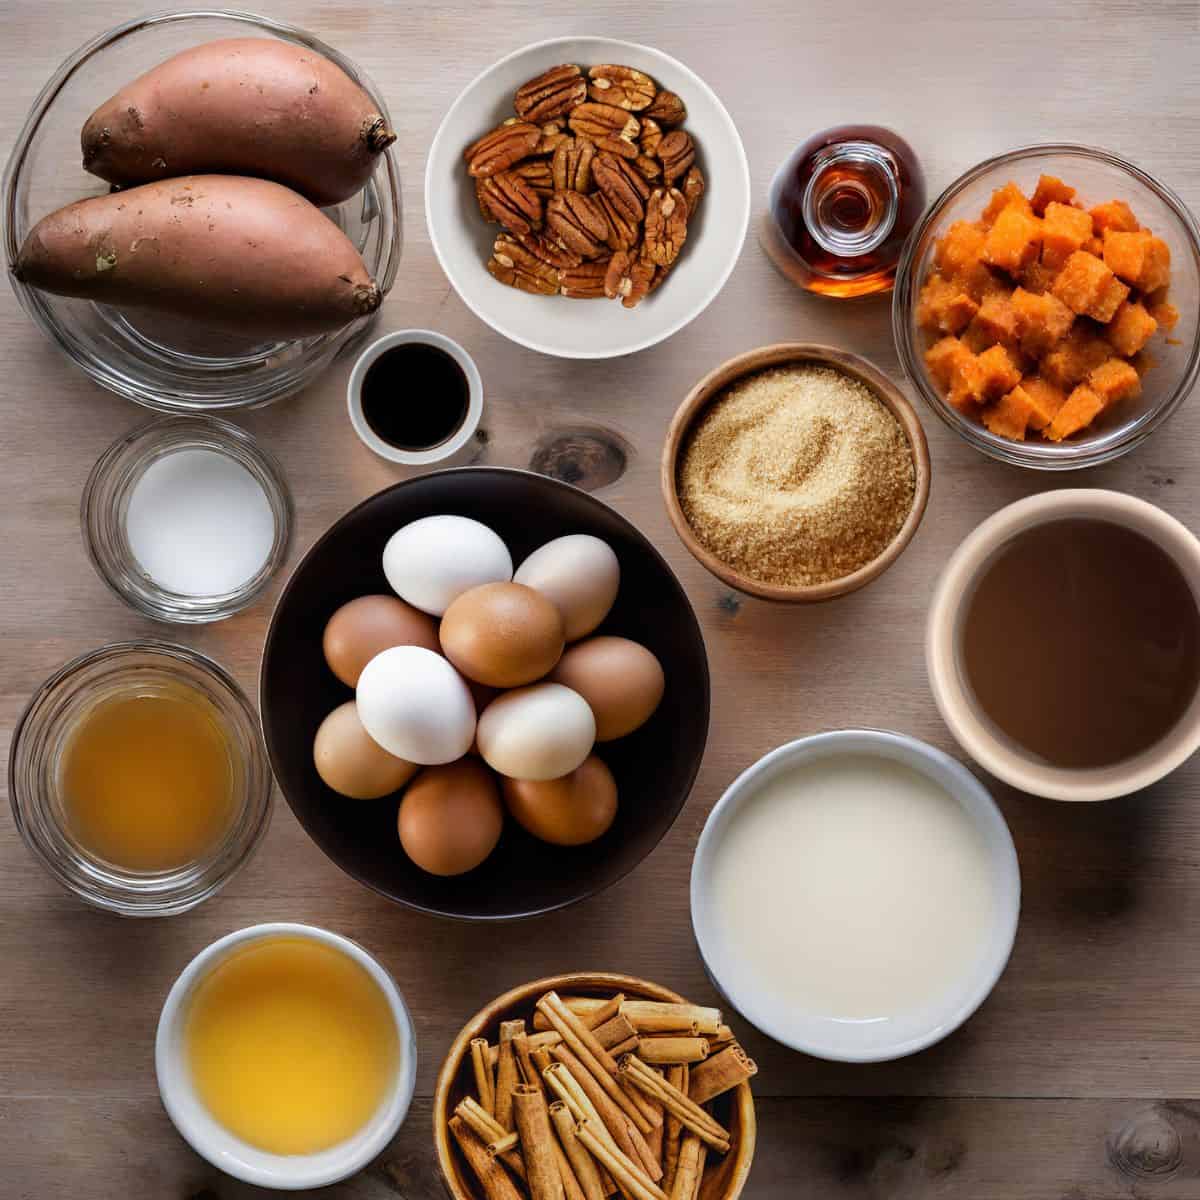 Ingredients for sweet potato casserole on wooden cutting board